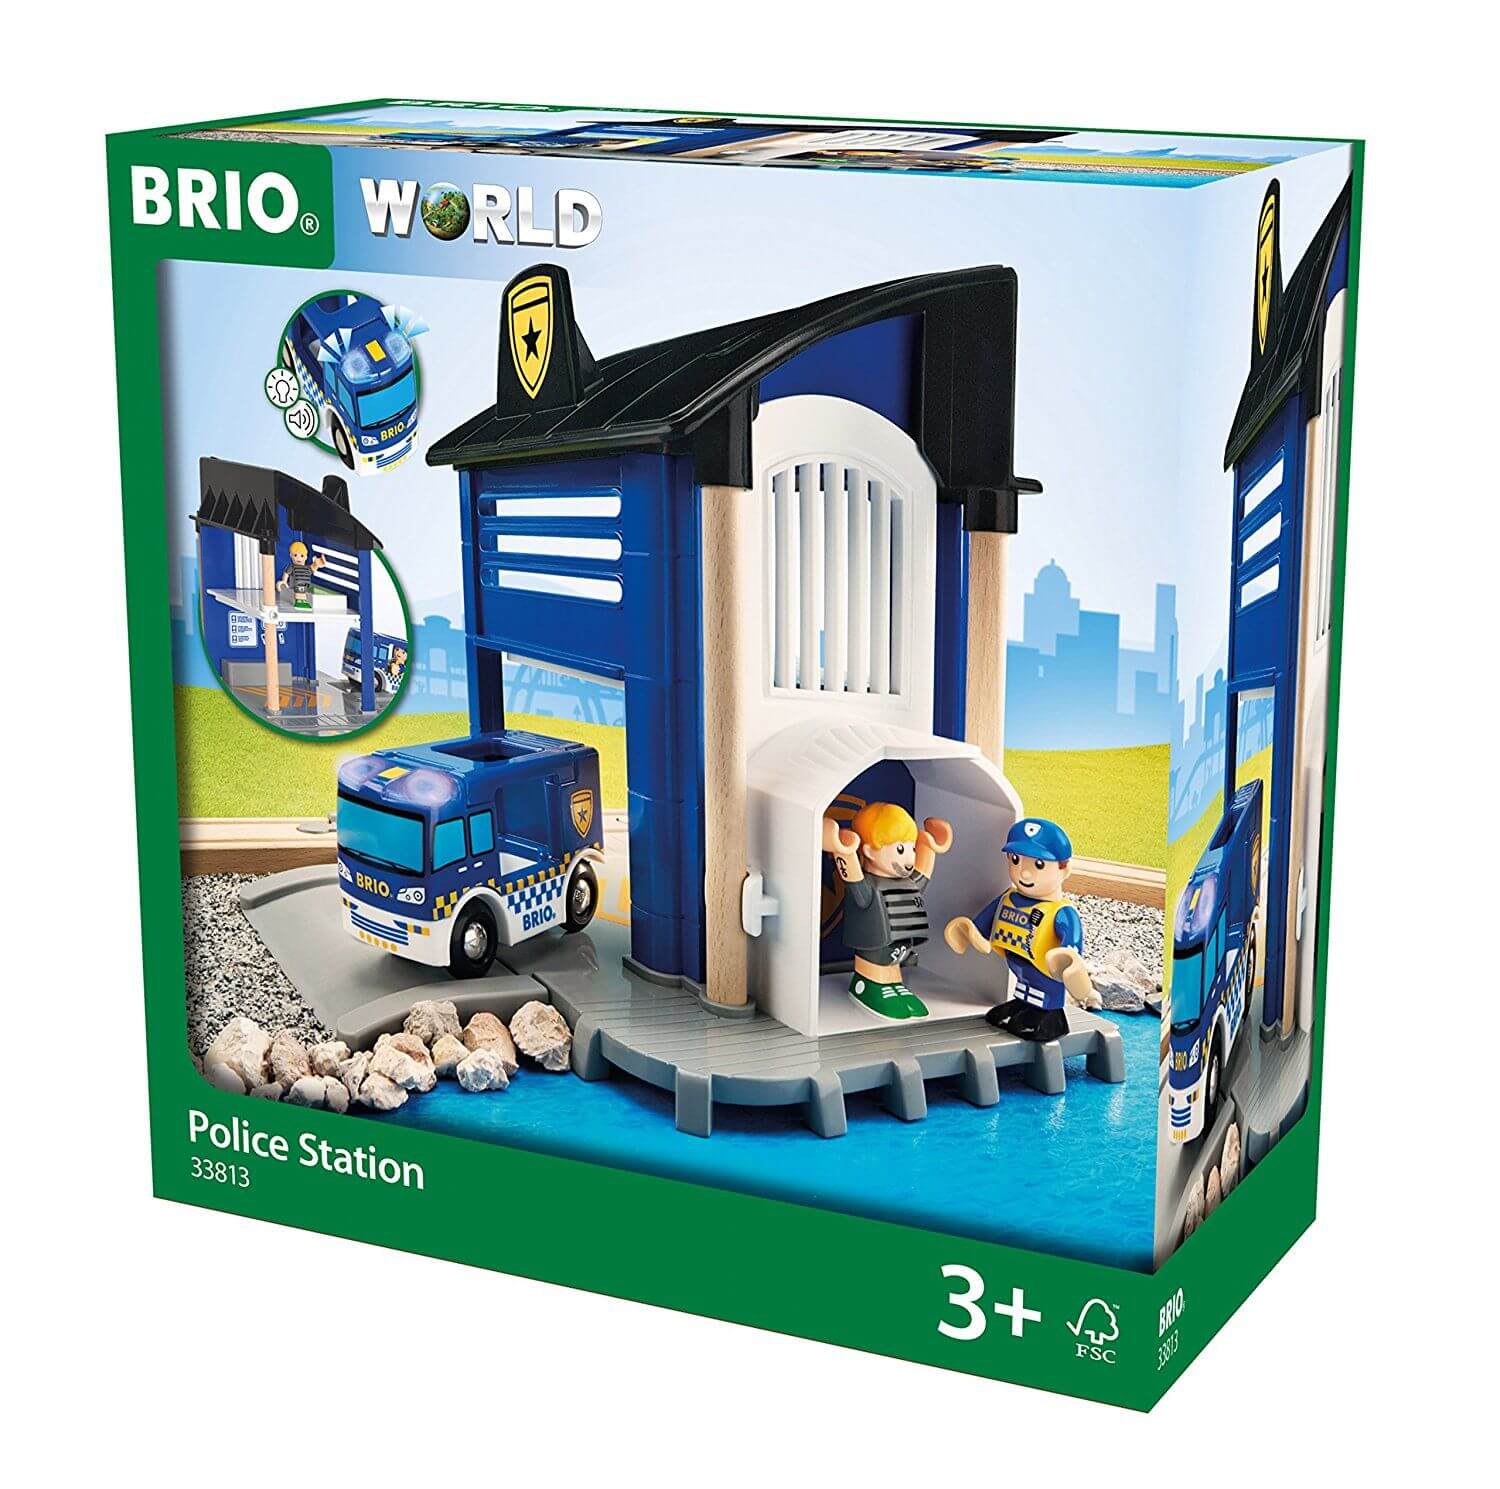 Police Station Set - Brio World - Toys & Co. - Brio